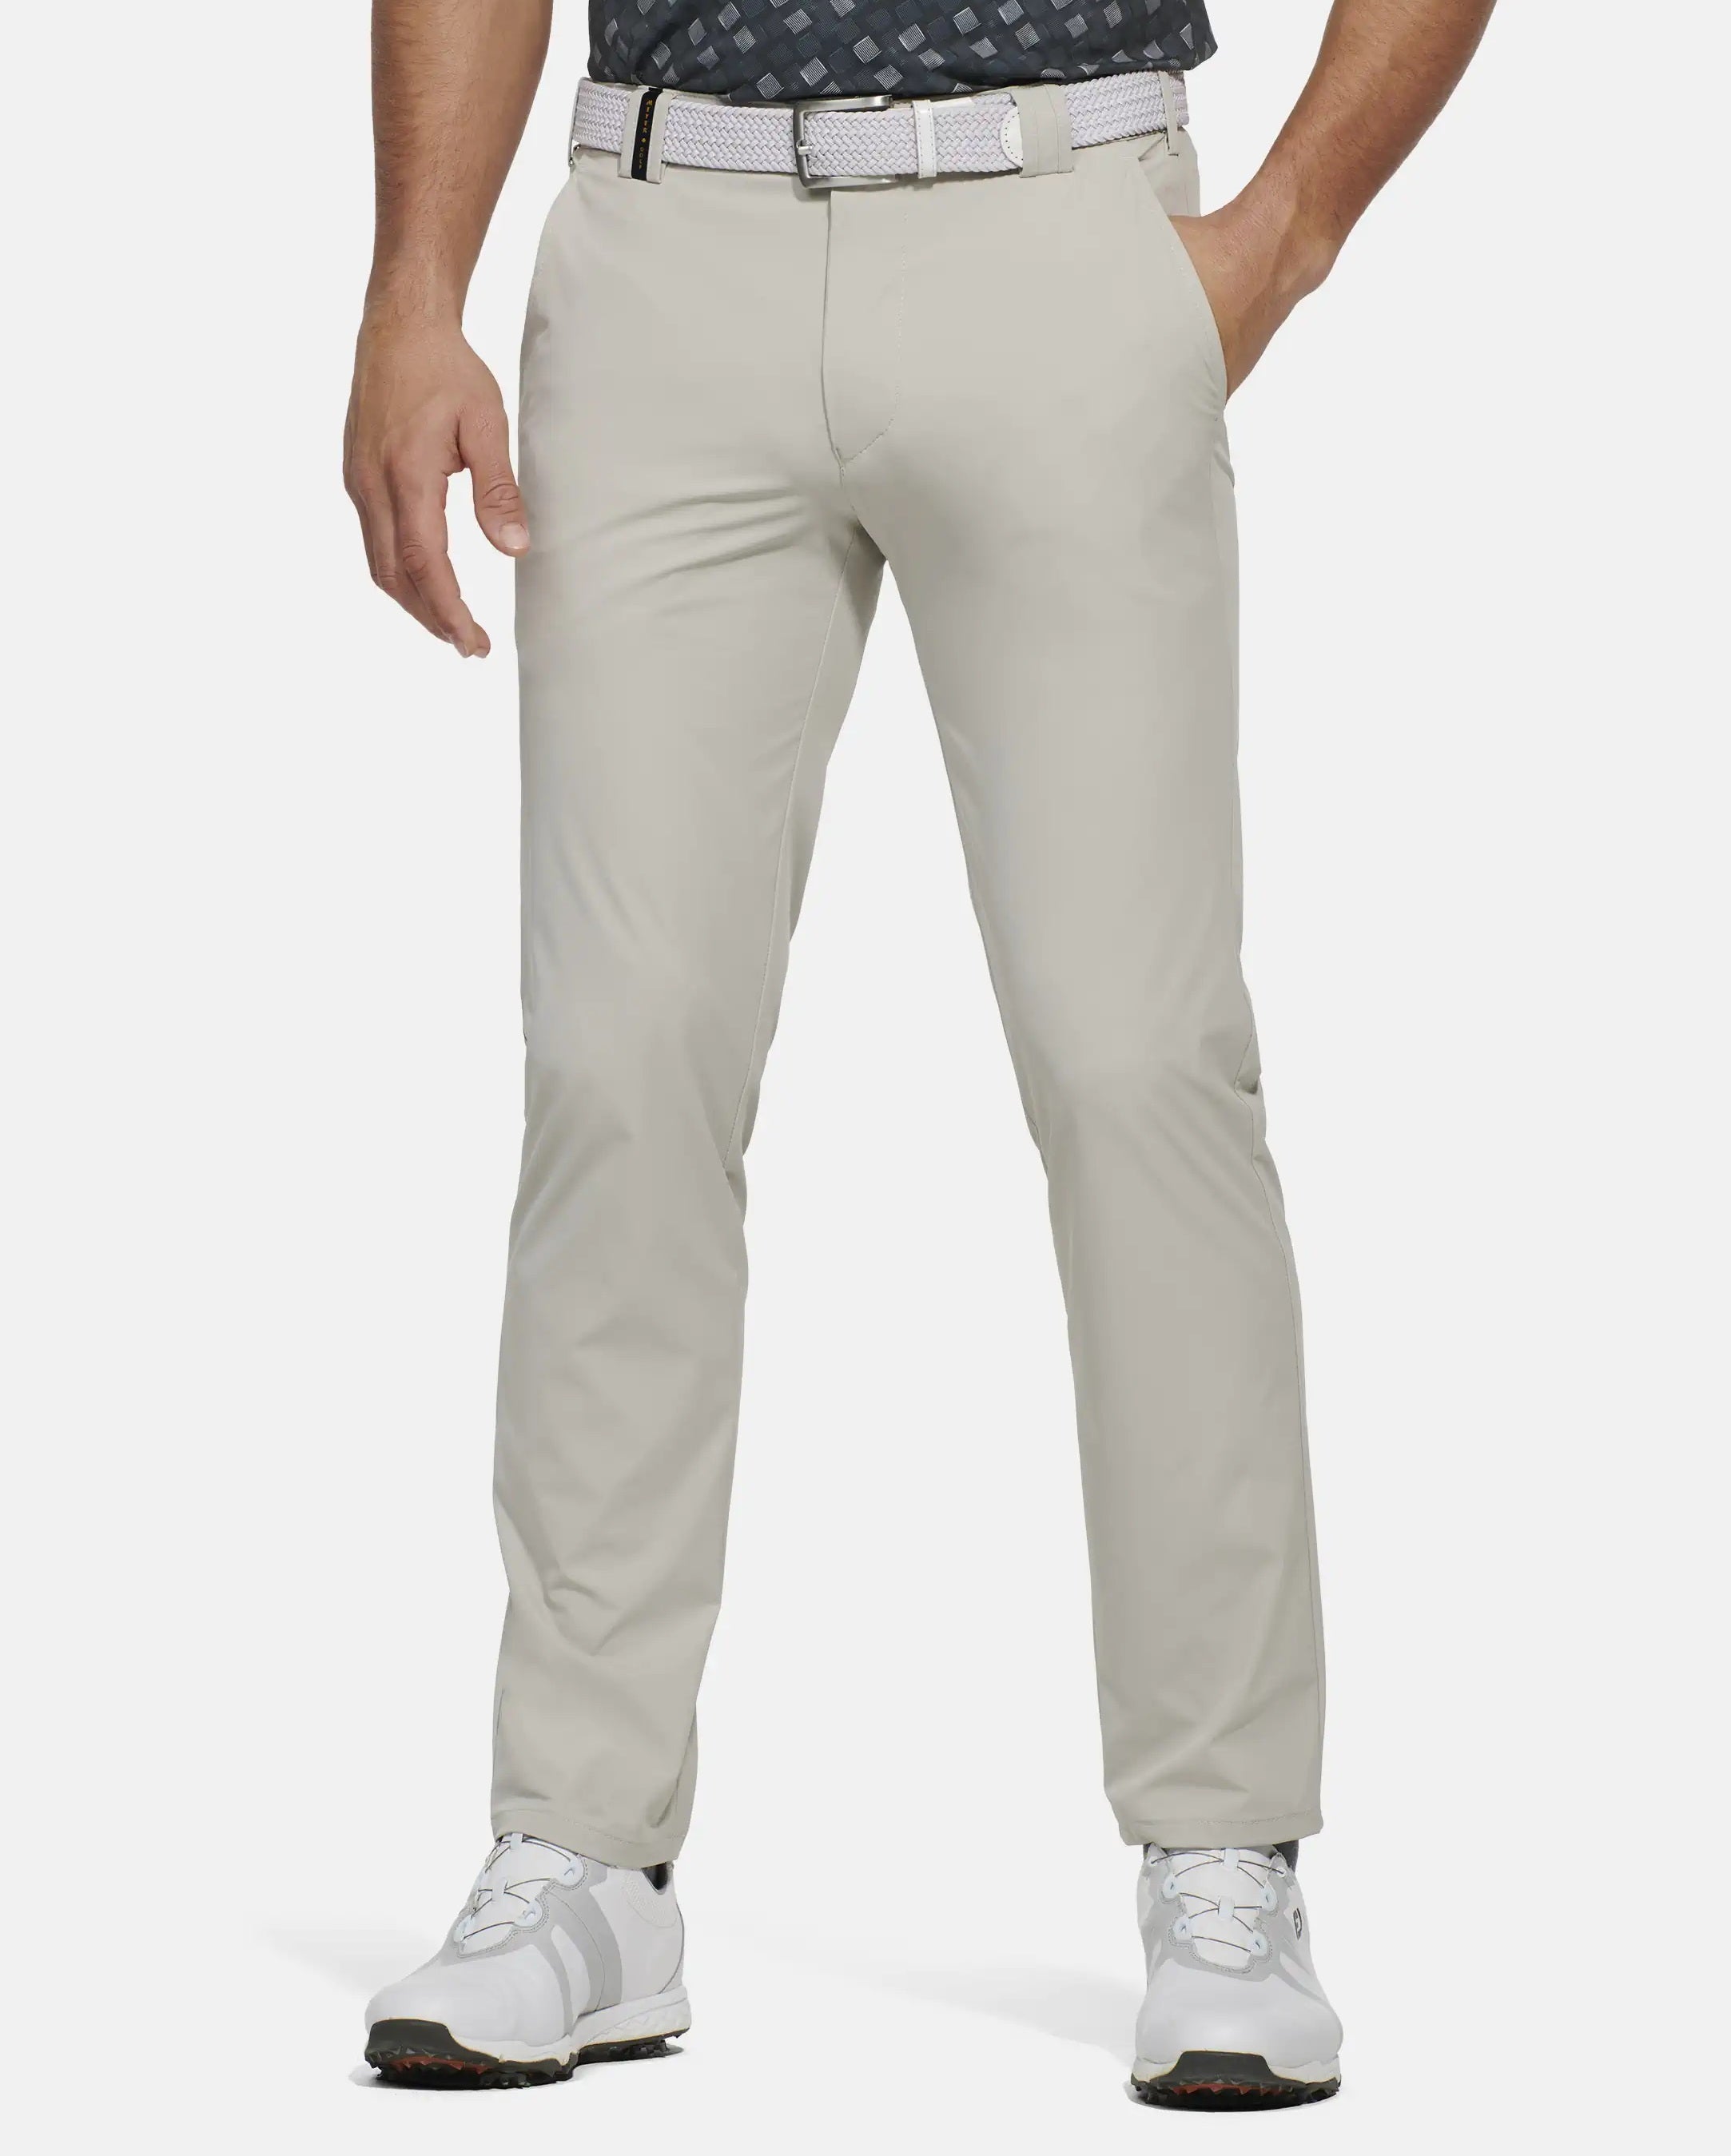 MEYER Golf Trousers - Augusta 8070 High Performance Chinos - Beige